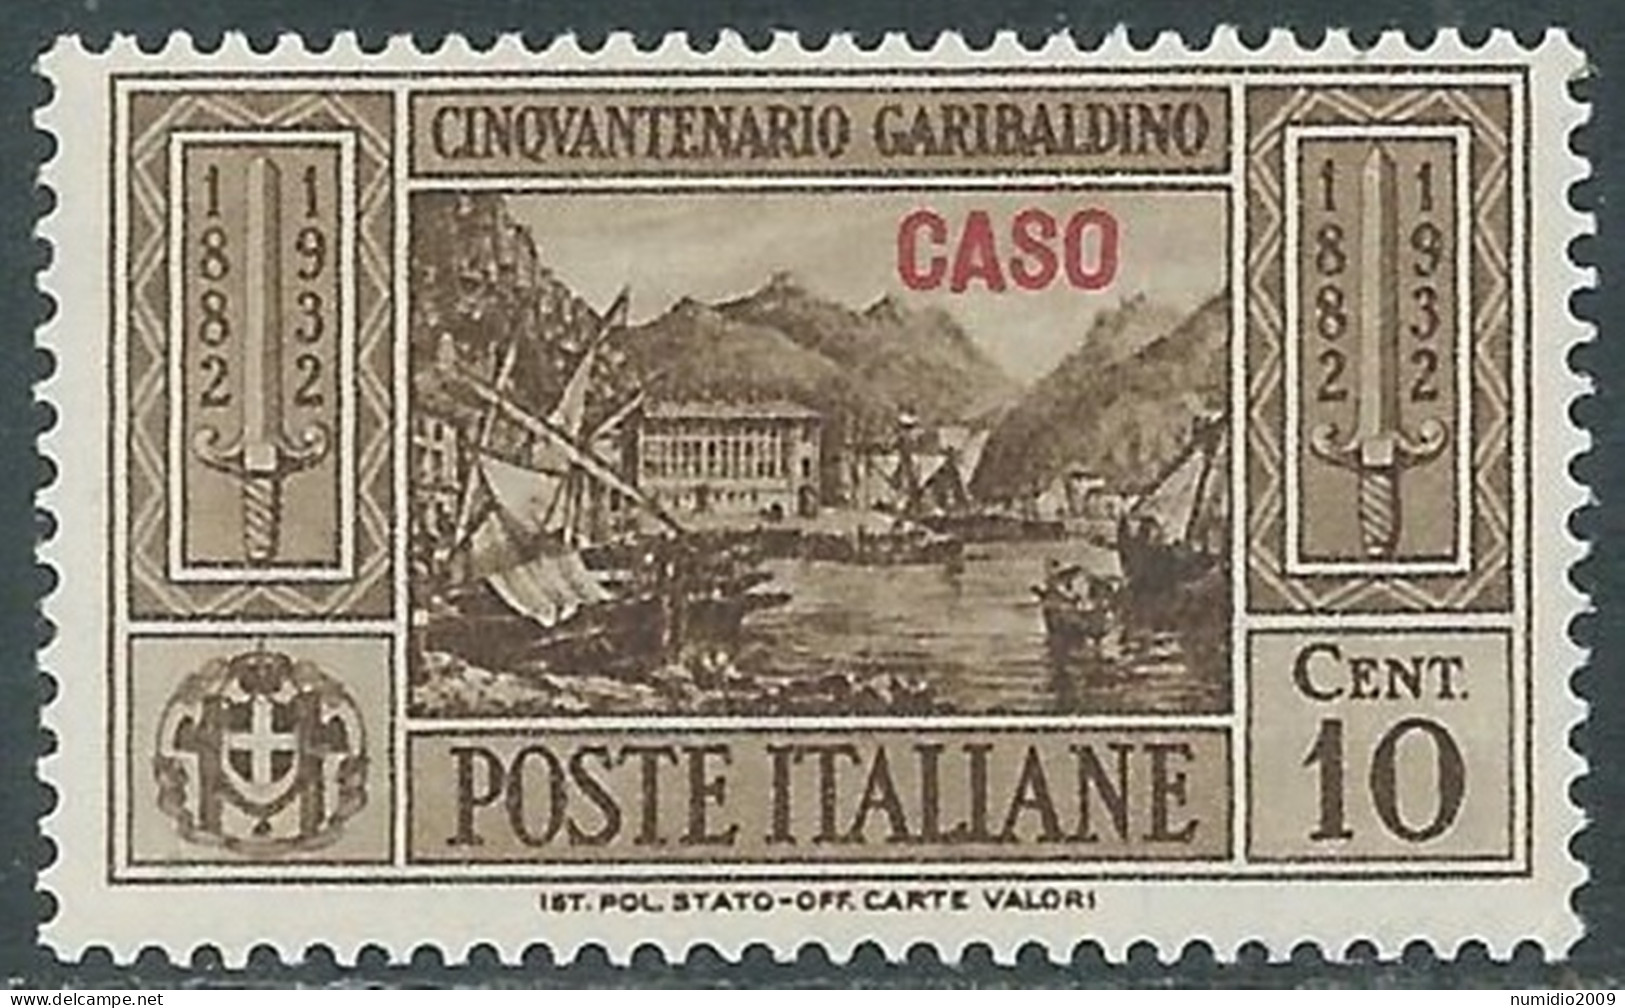 1932 EGEO CASO GARIBALDI 10 CENT MNH ** - I45-7 - Egeo (Caso)